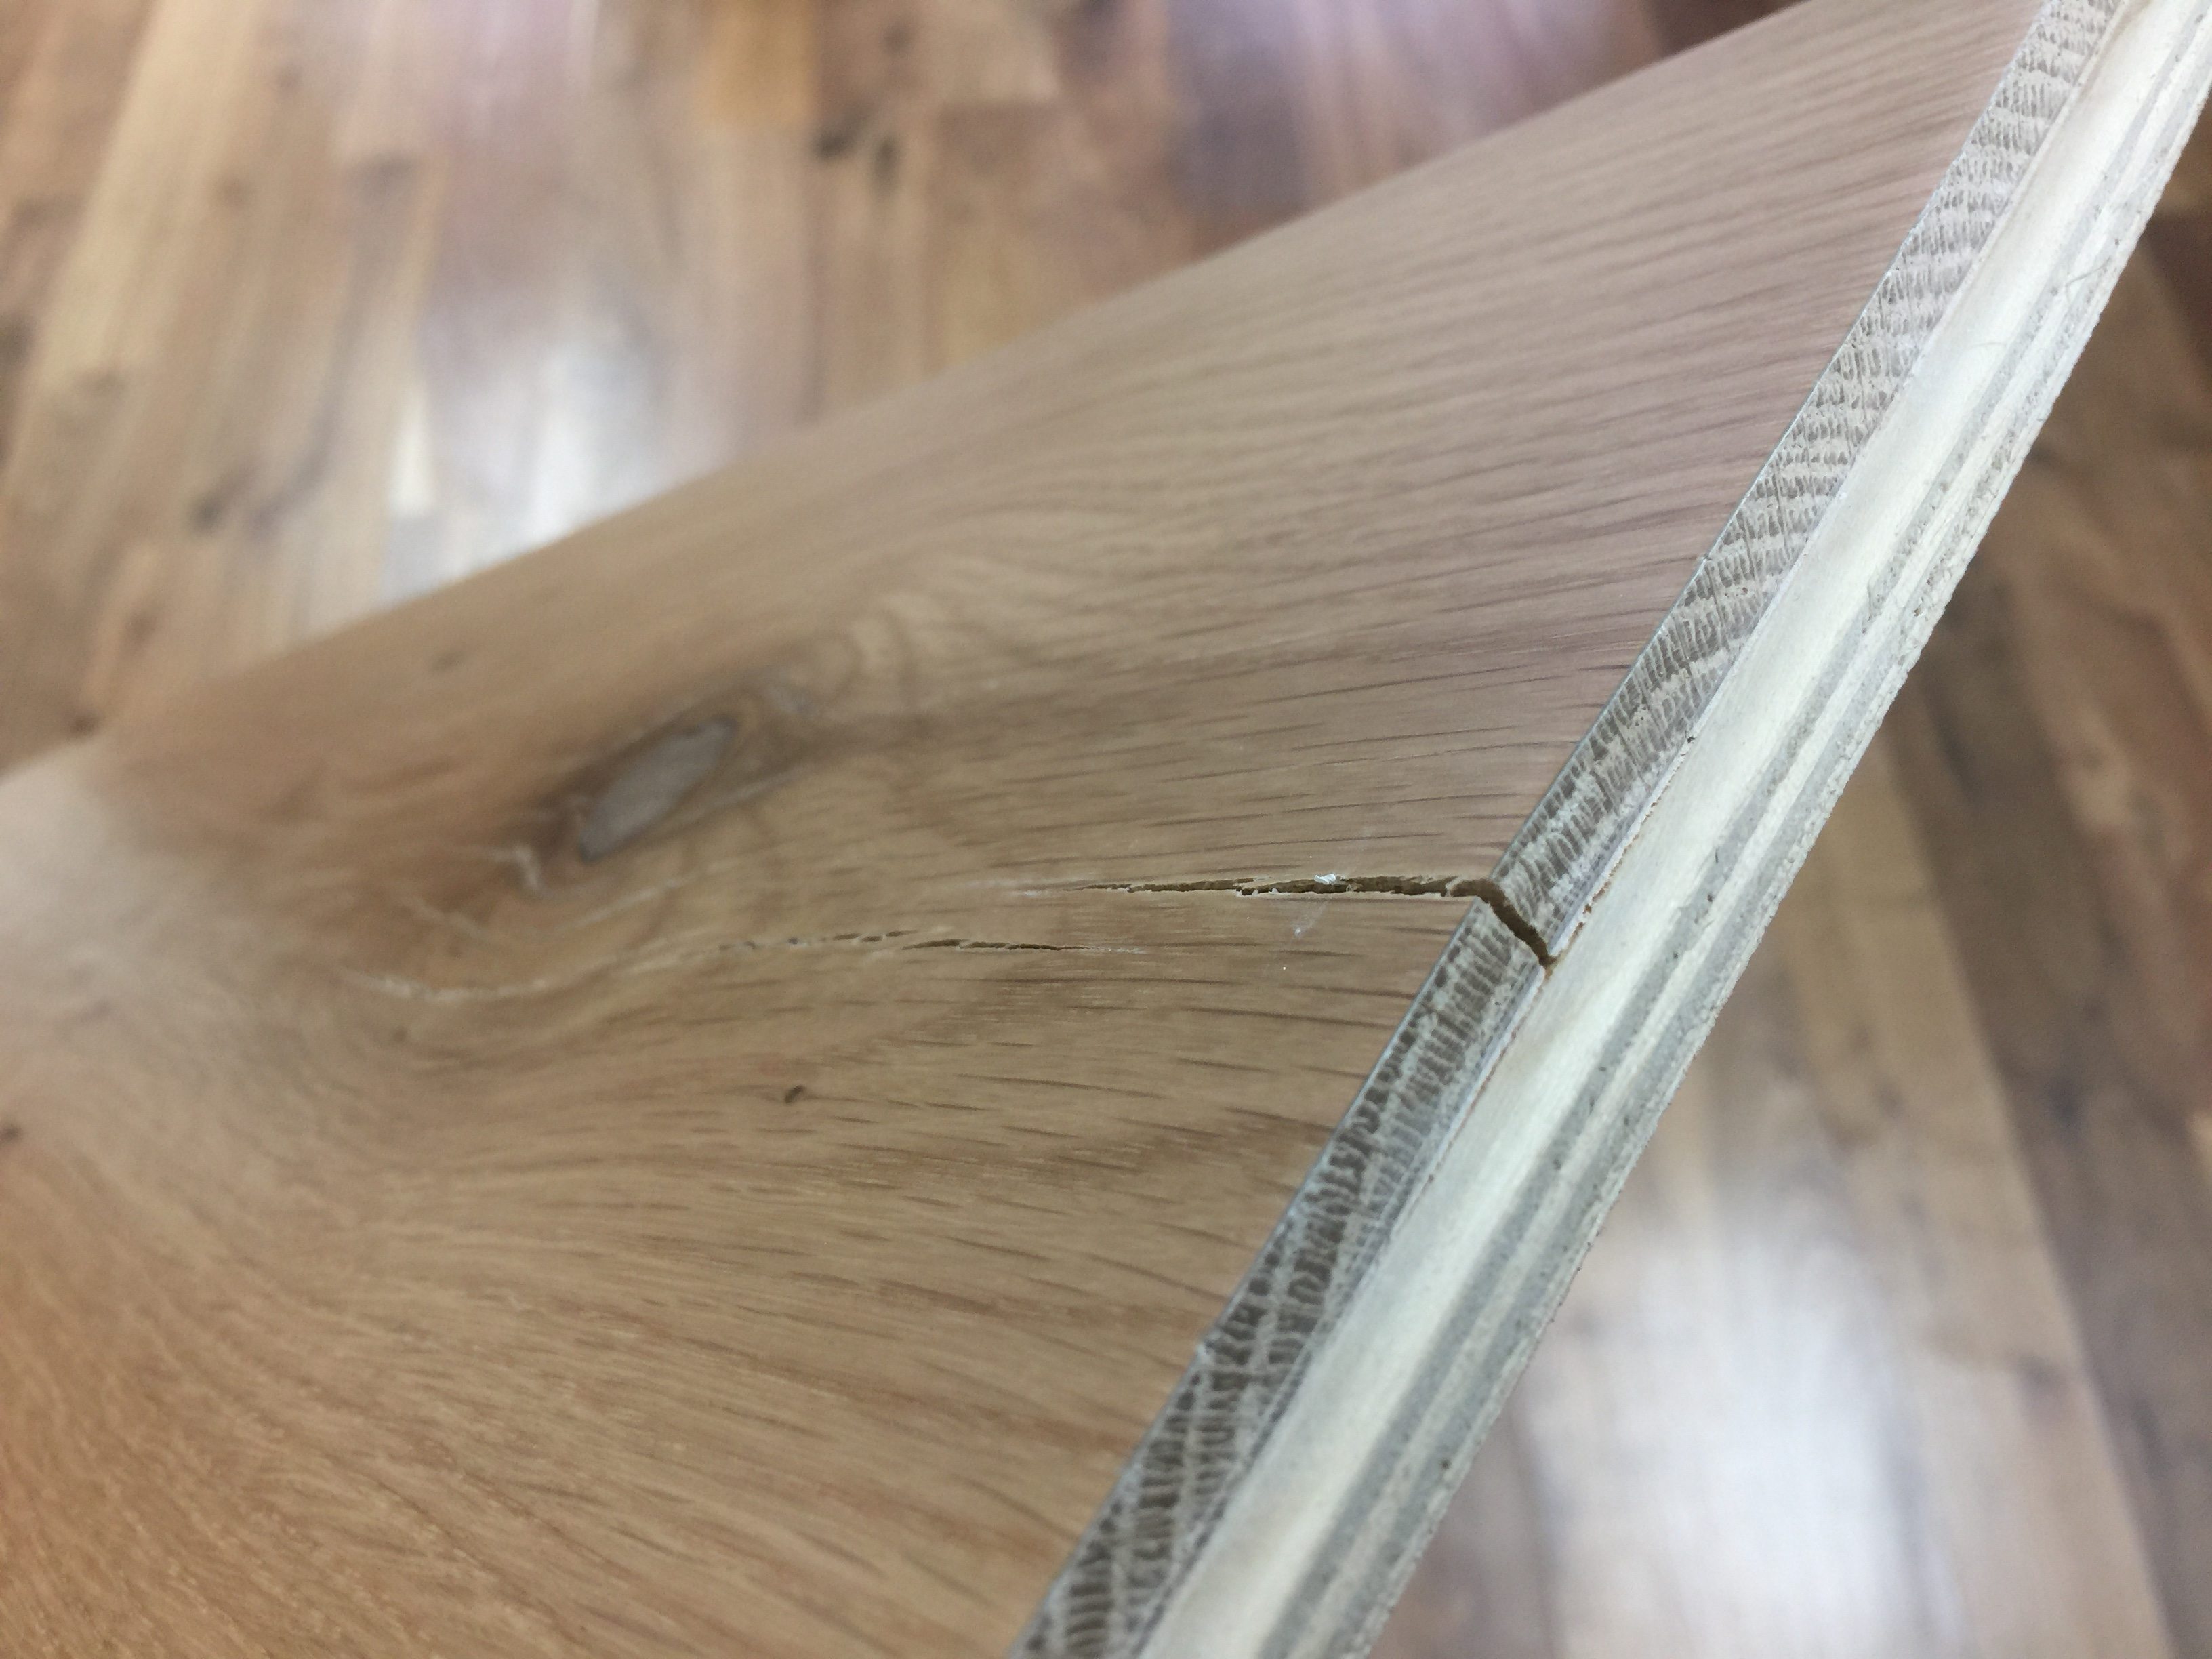 cracks hardwood floor surface